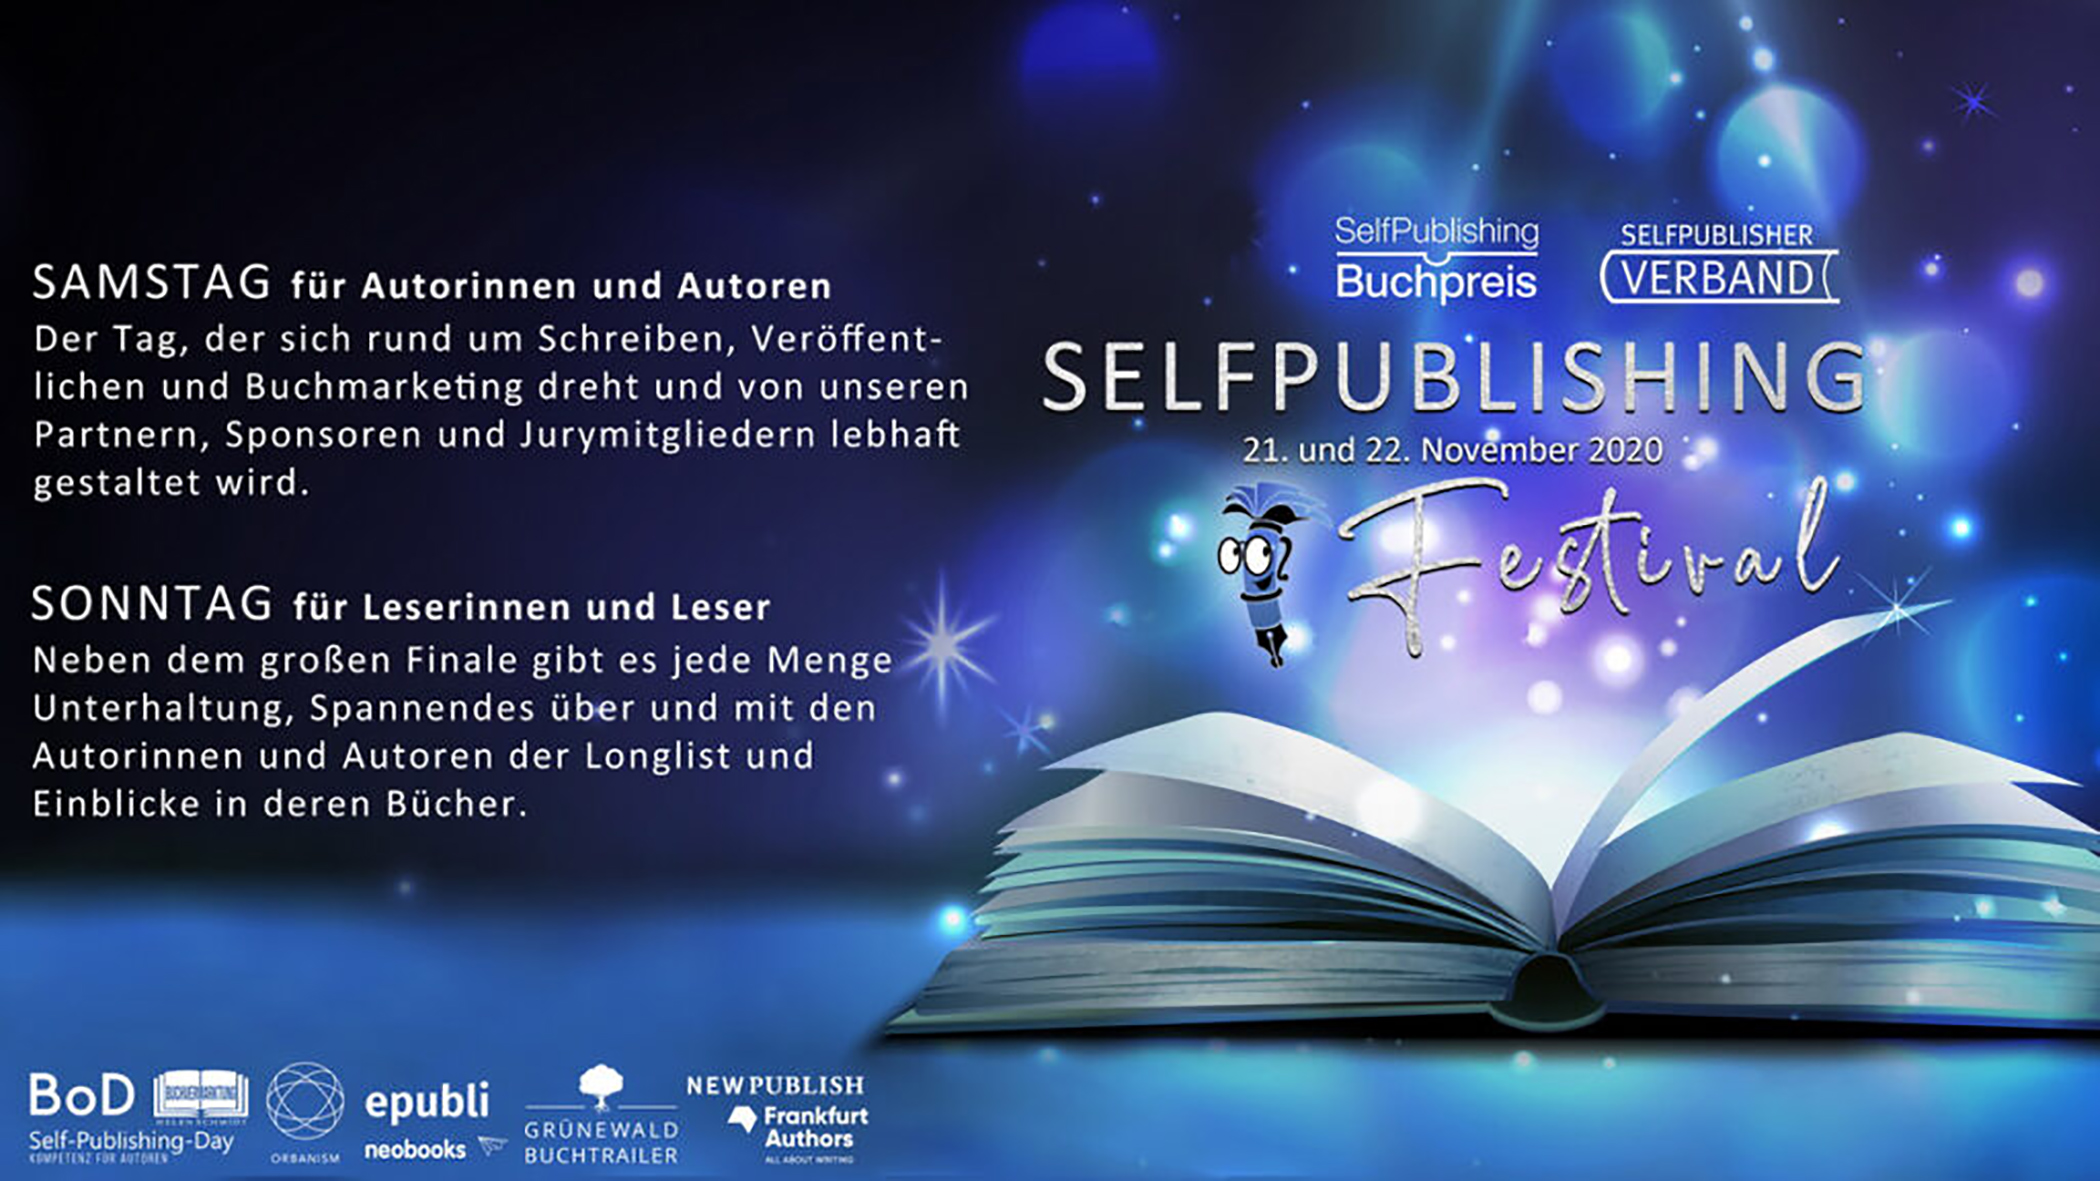 Selfpublisher-Verband richtet erstmals das Selfpublishing-Festival digital aus